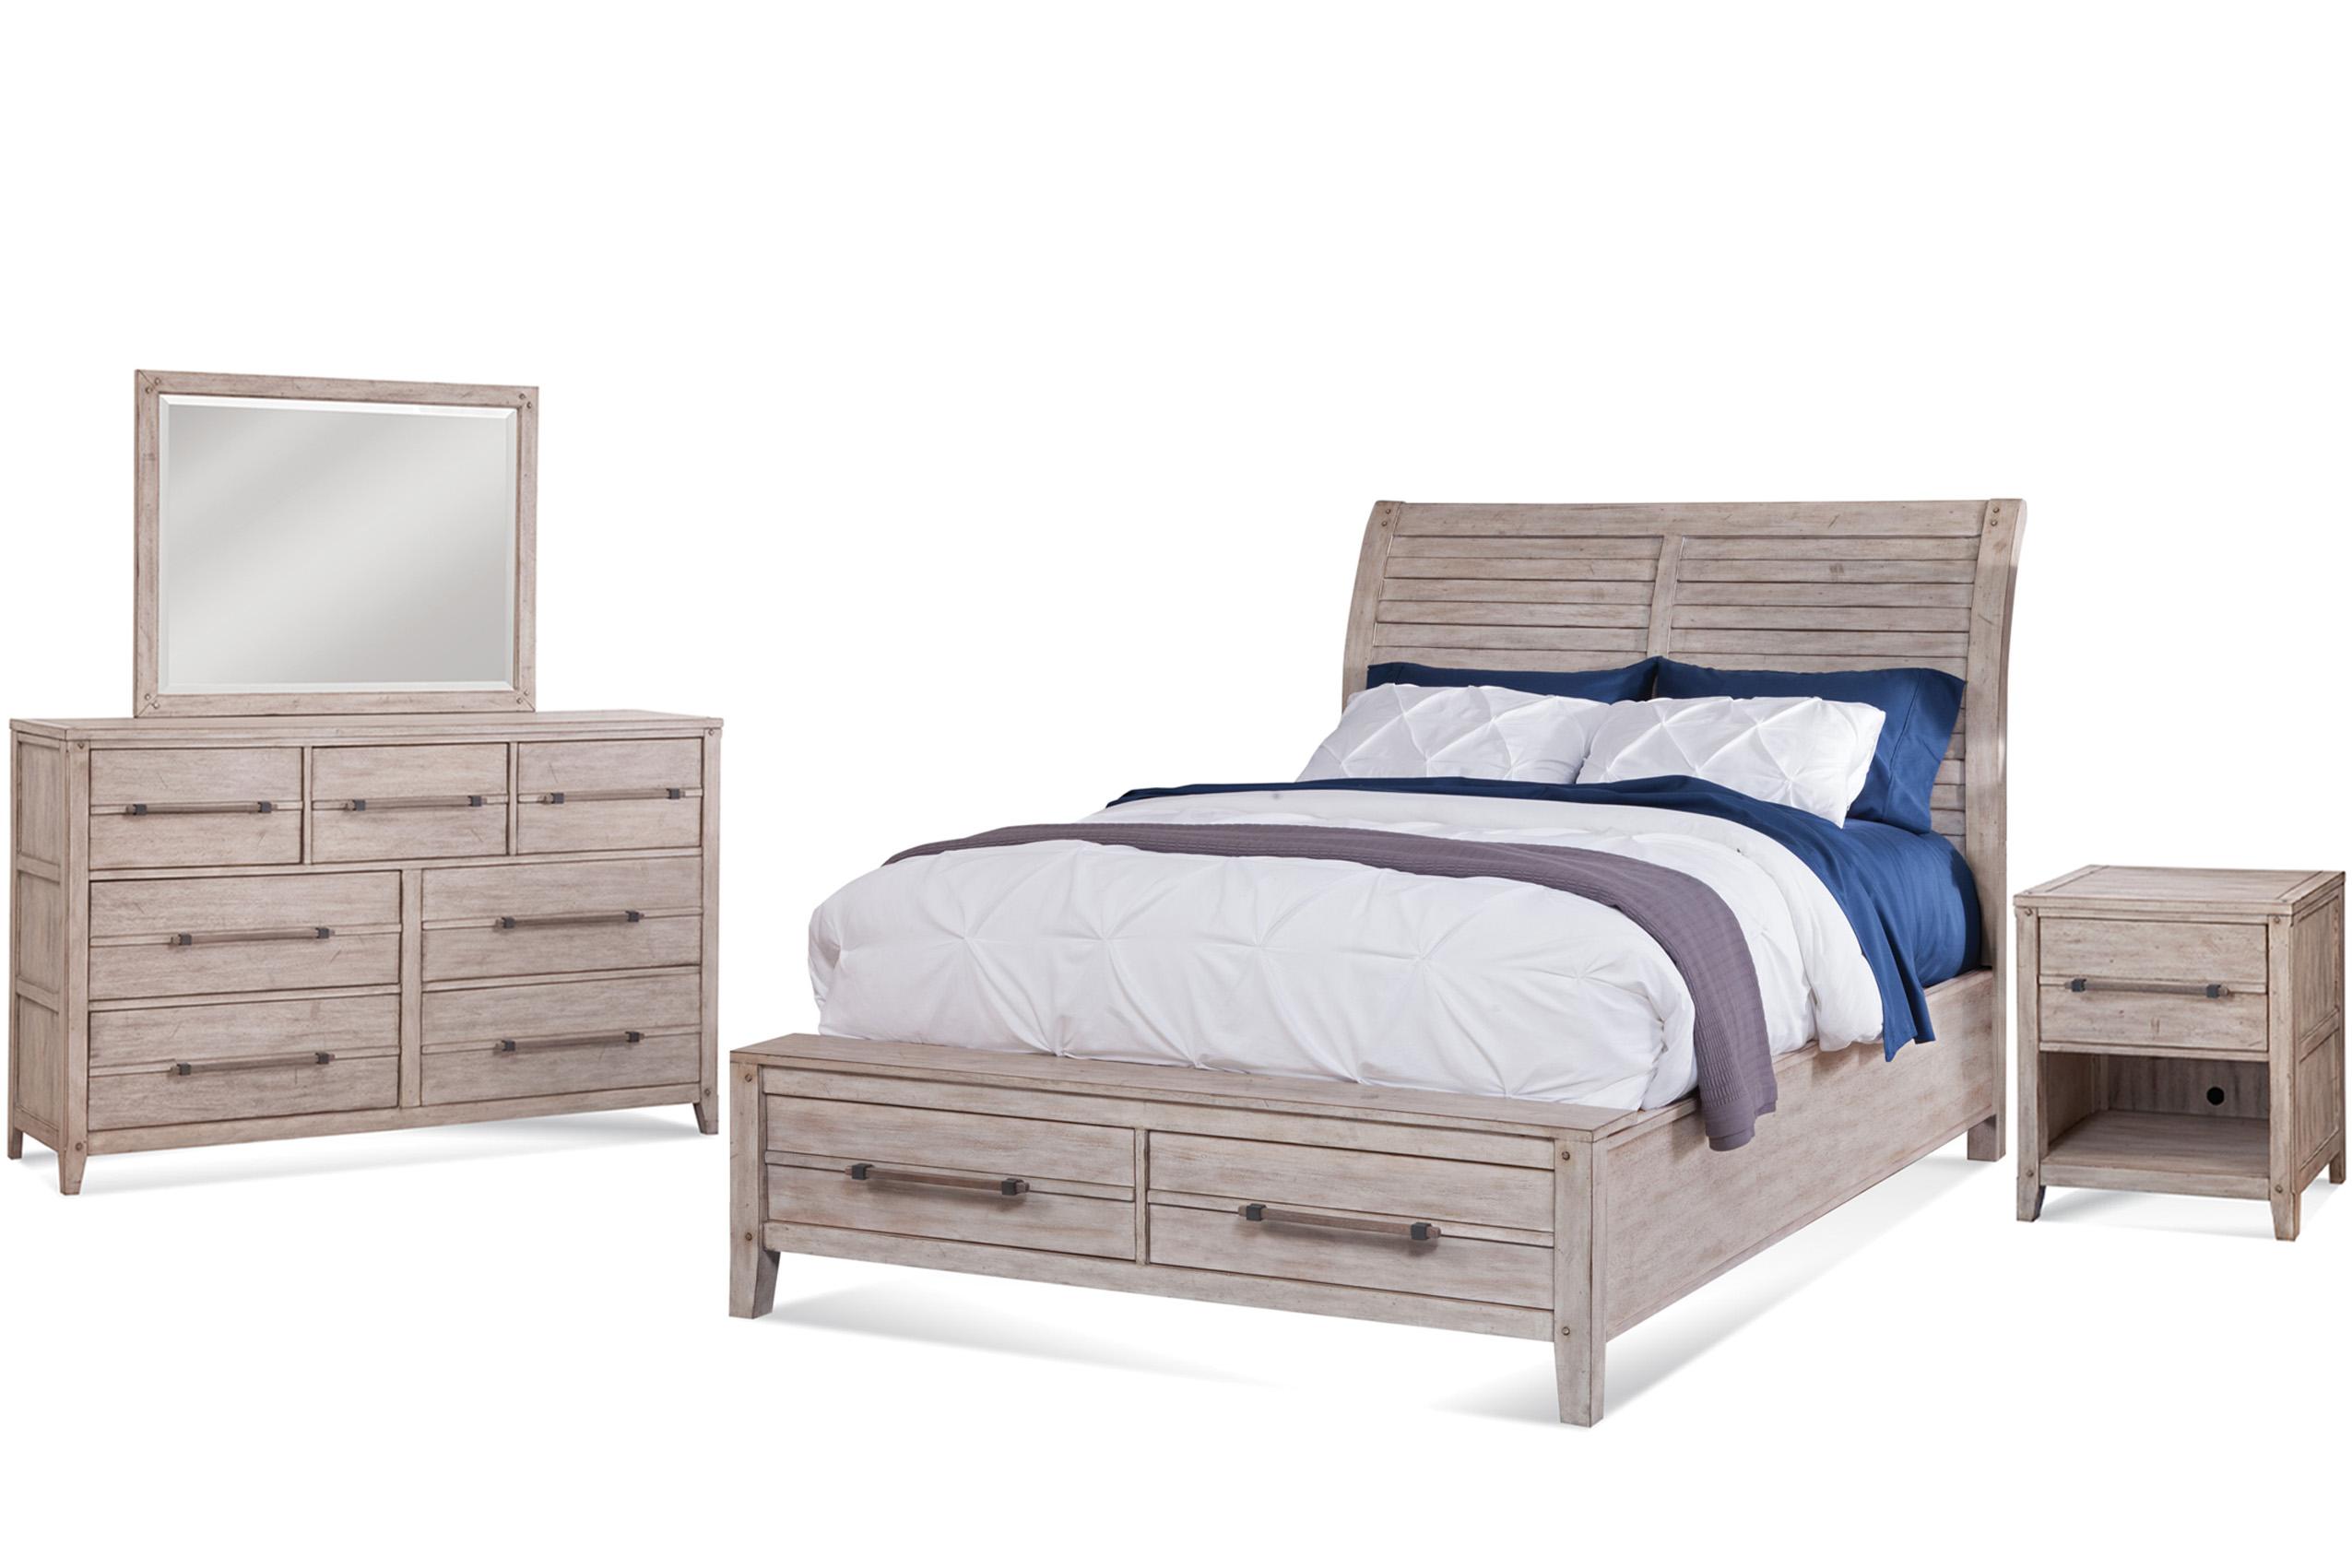 Classic, Traditional Sleigh Bedroom Set AURORA 2810-50PSB 2810-QSLST-4PC in whitewash 